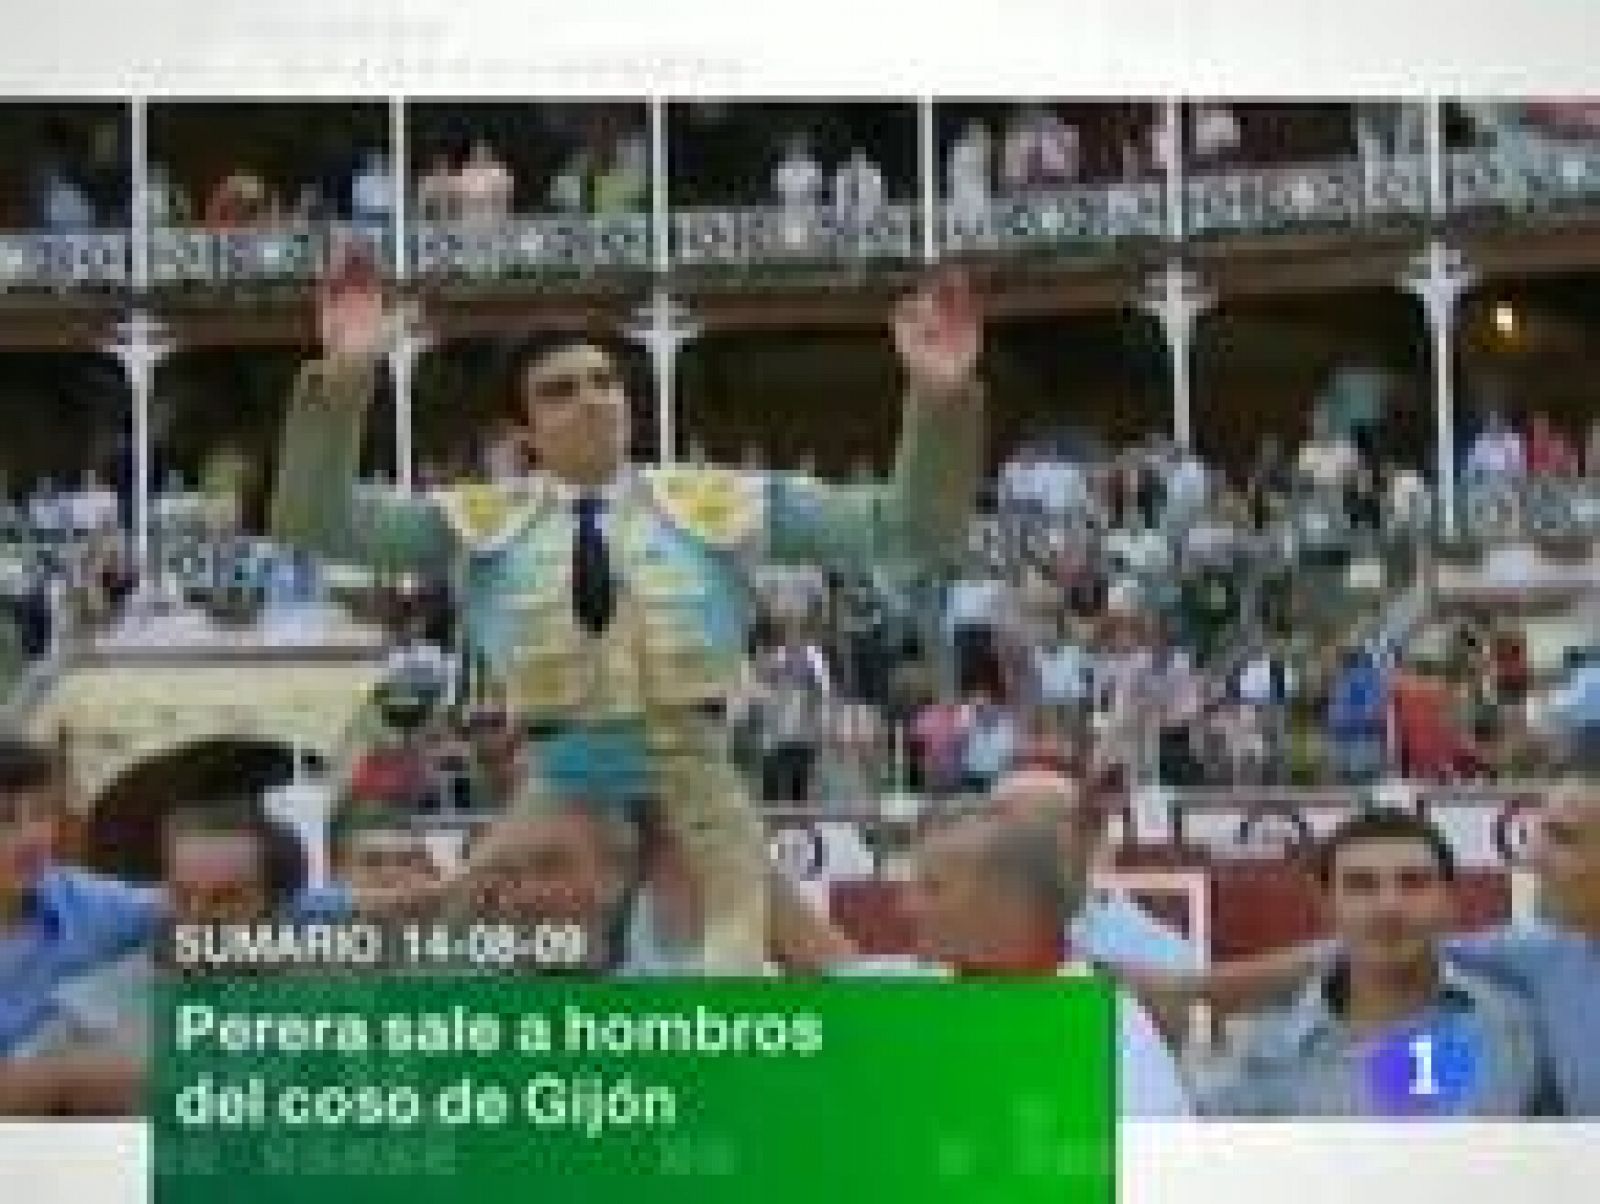 Noticias de Extremadura: Noticias de Extremadura - 14/08/09 | RTVE Play